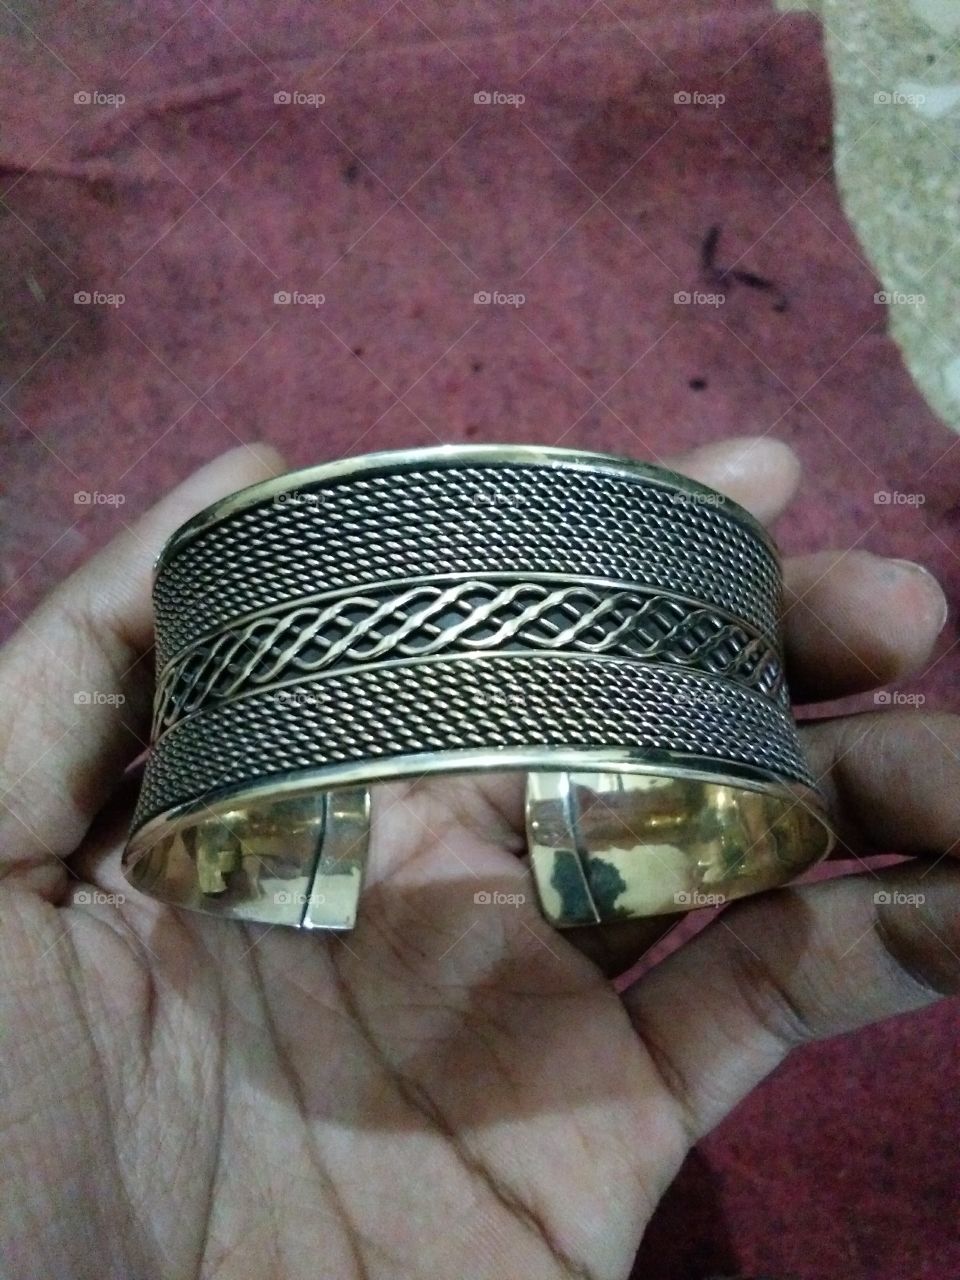 arm bracelet